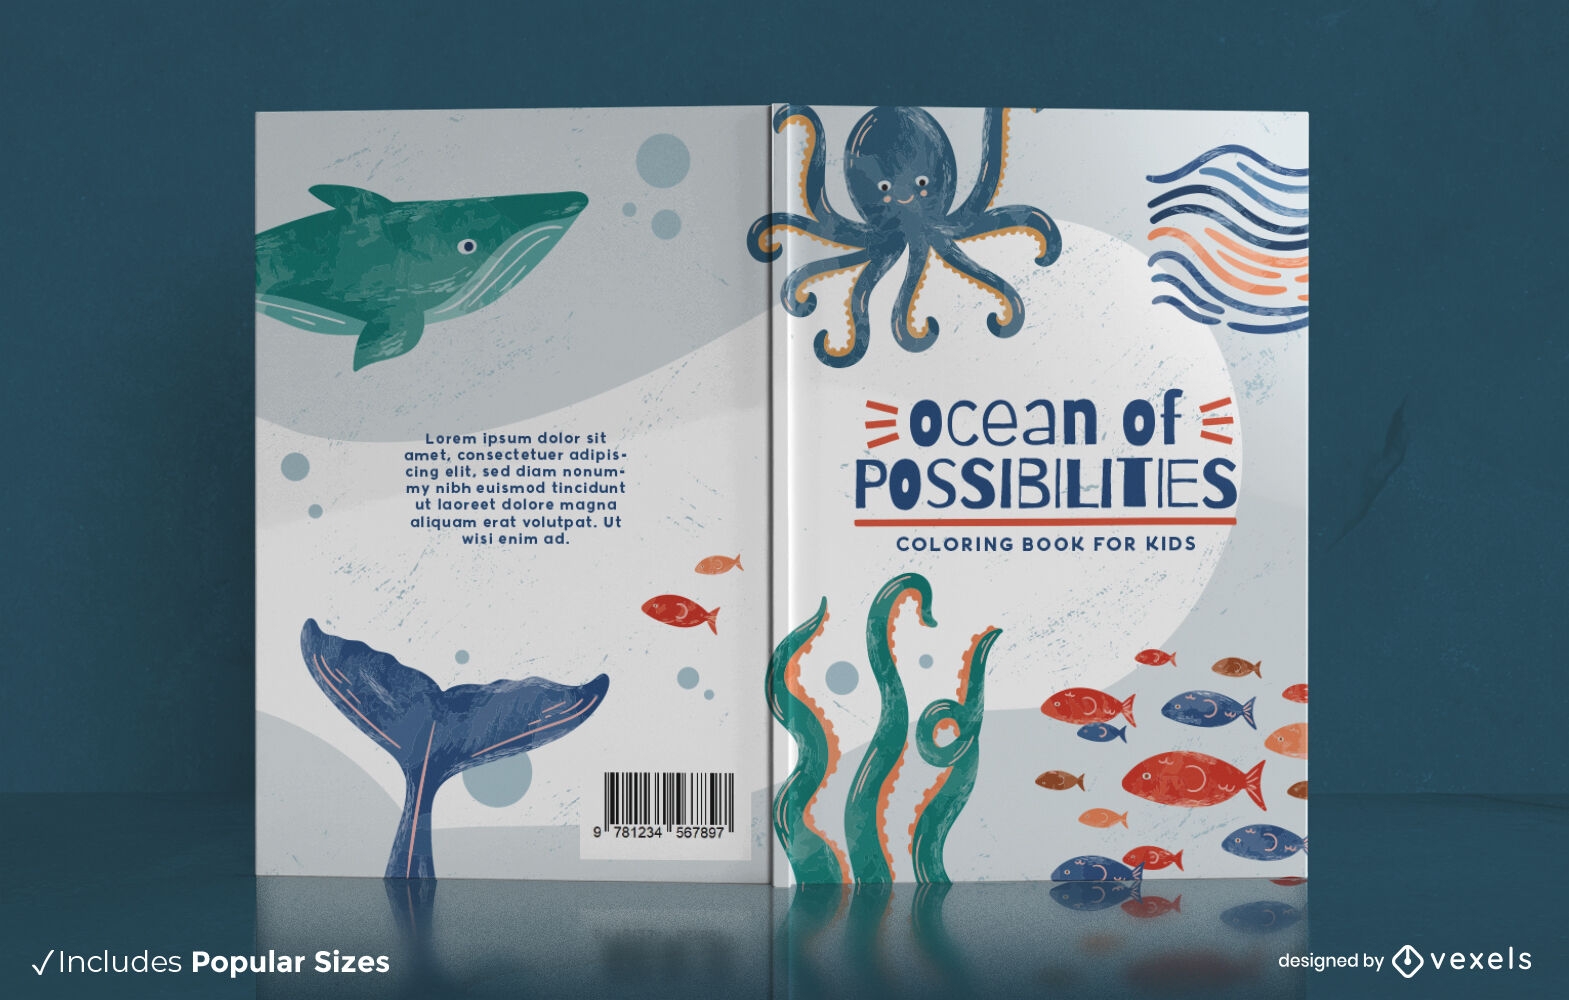 Ocean of possibilities coloring book cover design